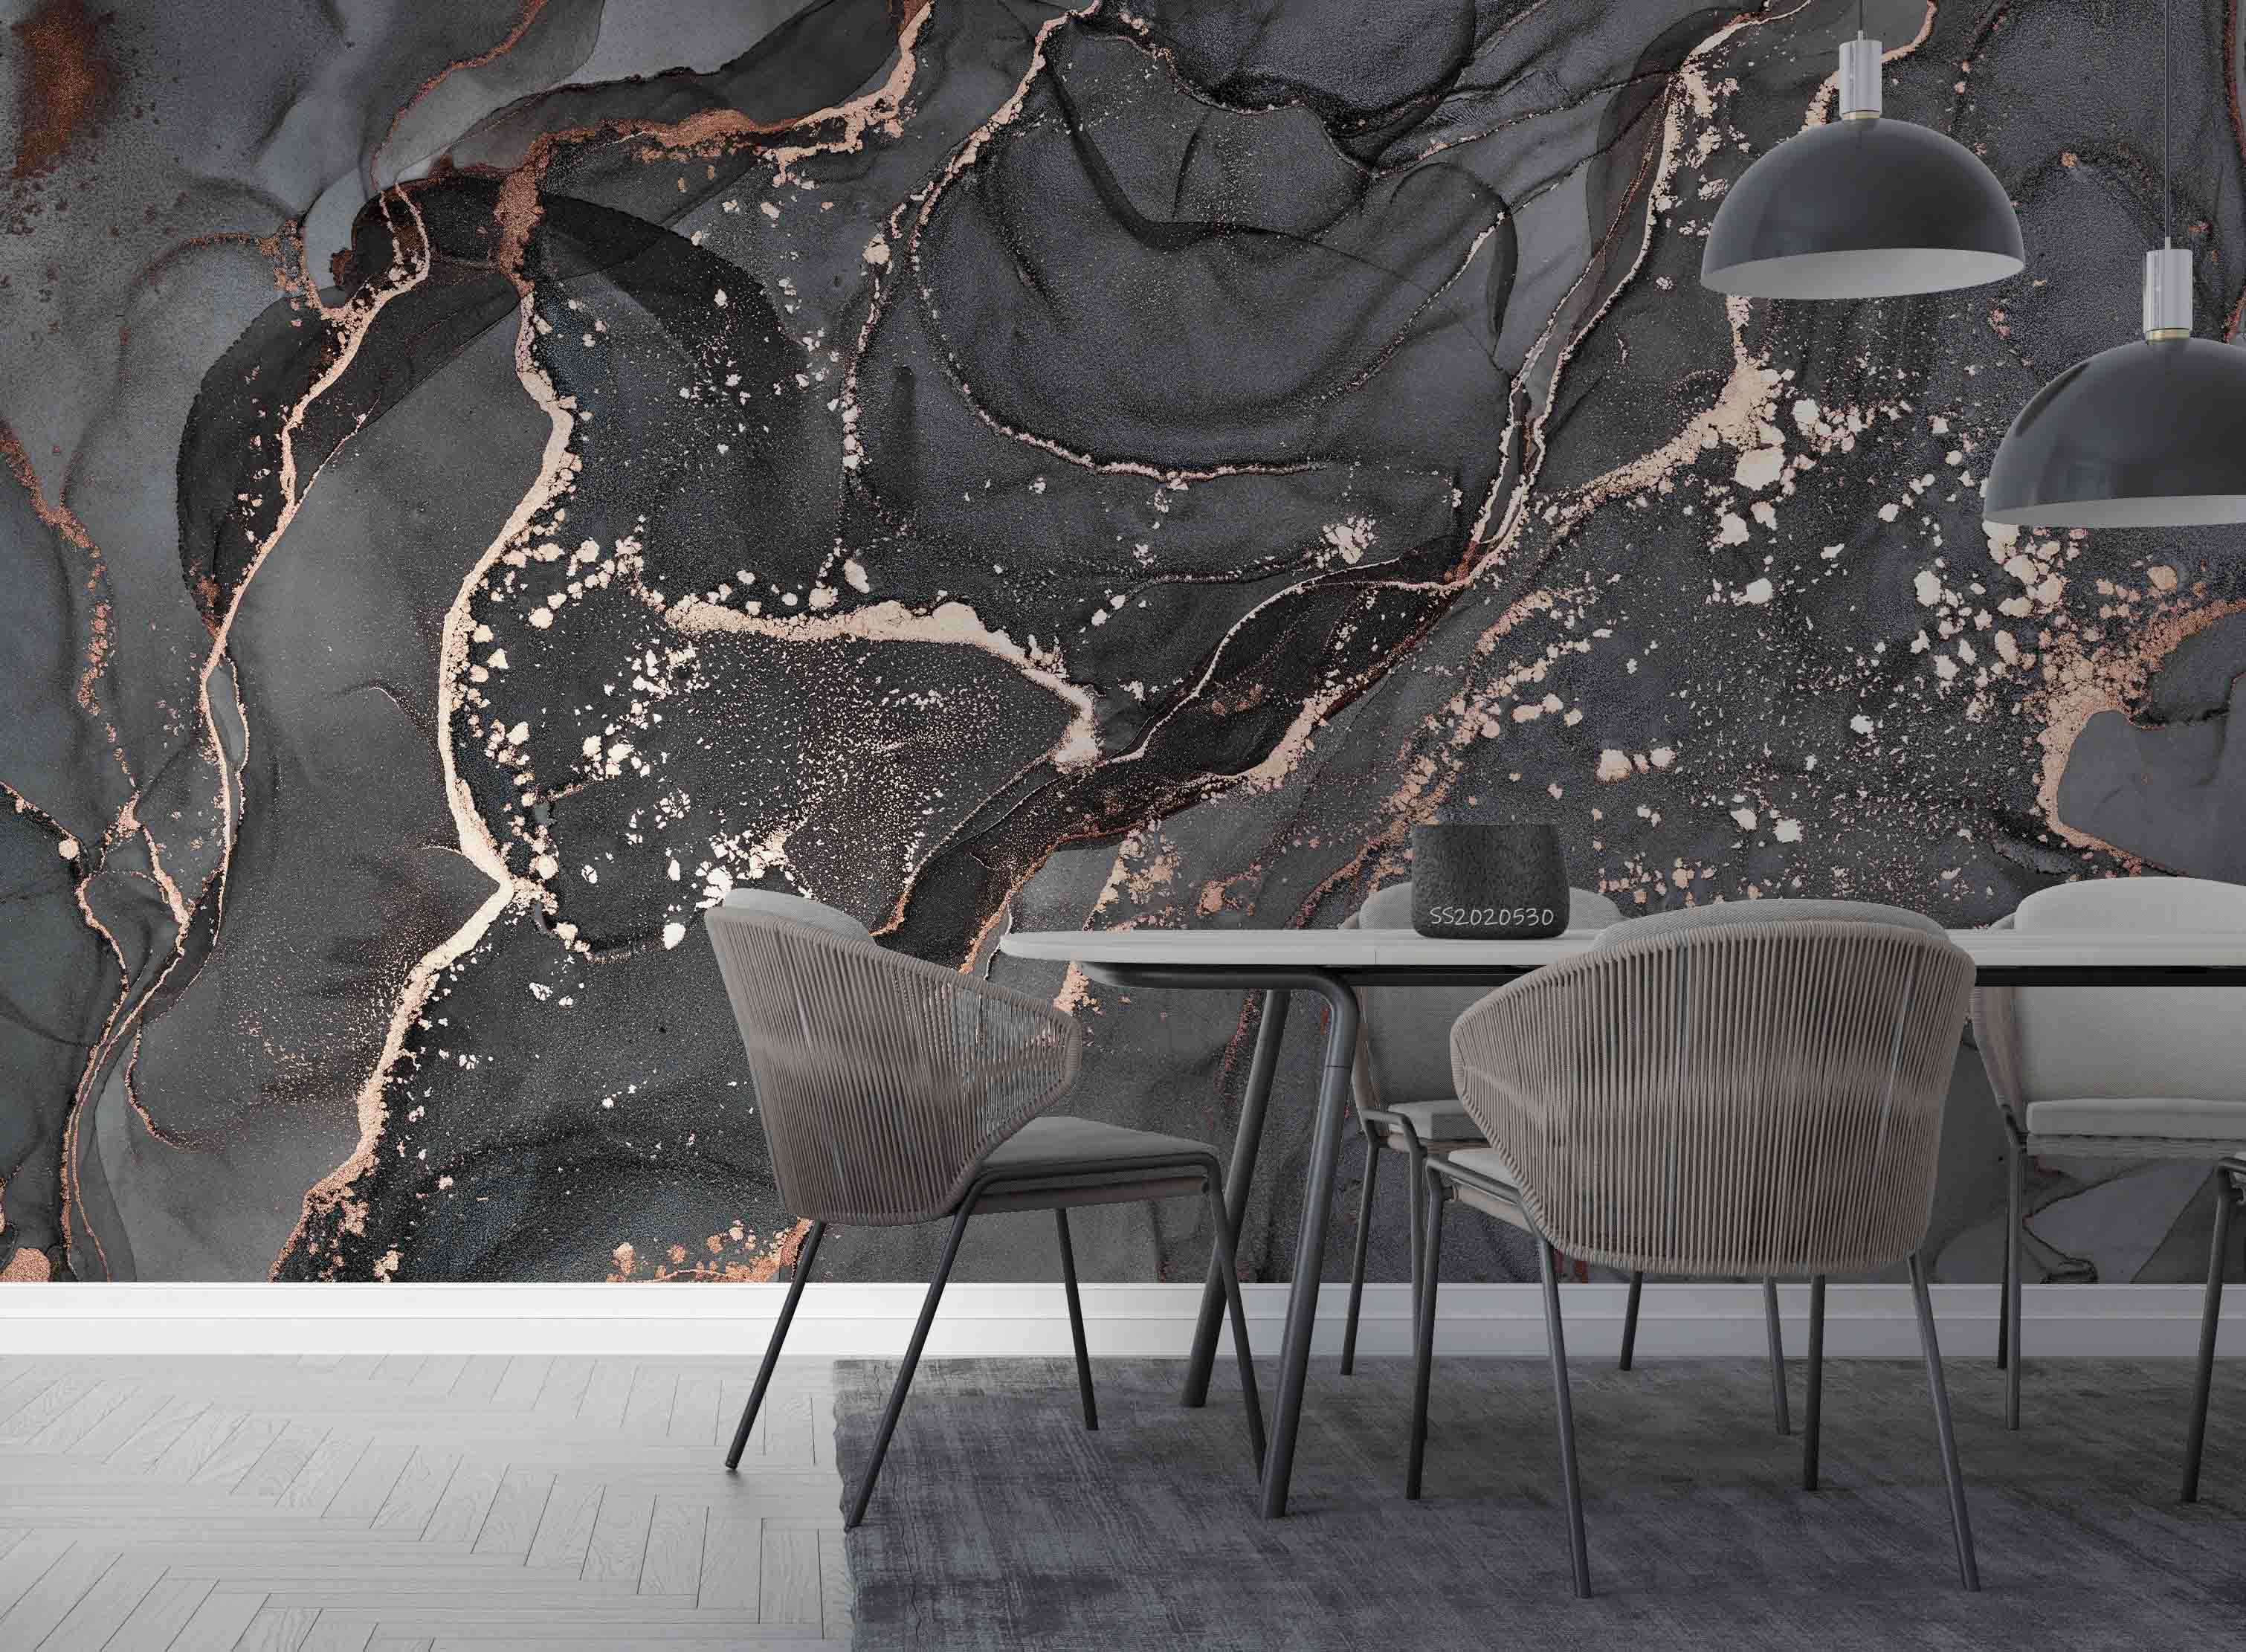 3D Abstract Marble Texture Black Wall Mural Wallpaper GD 41- Jess Art Decoration